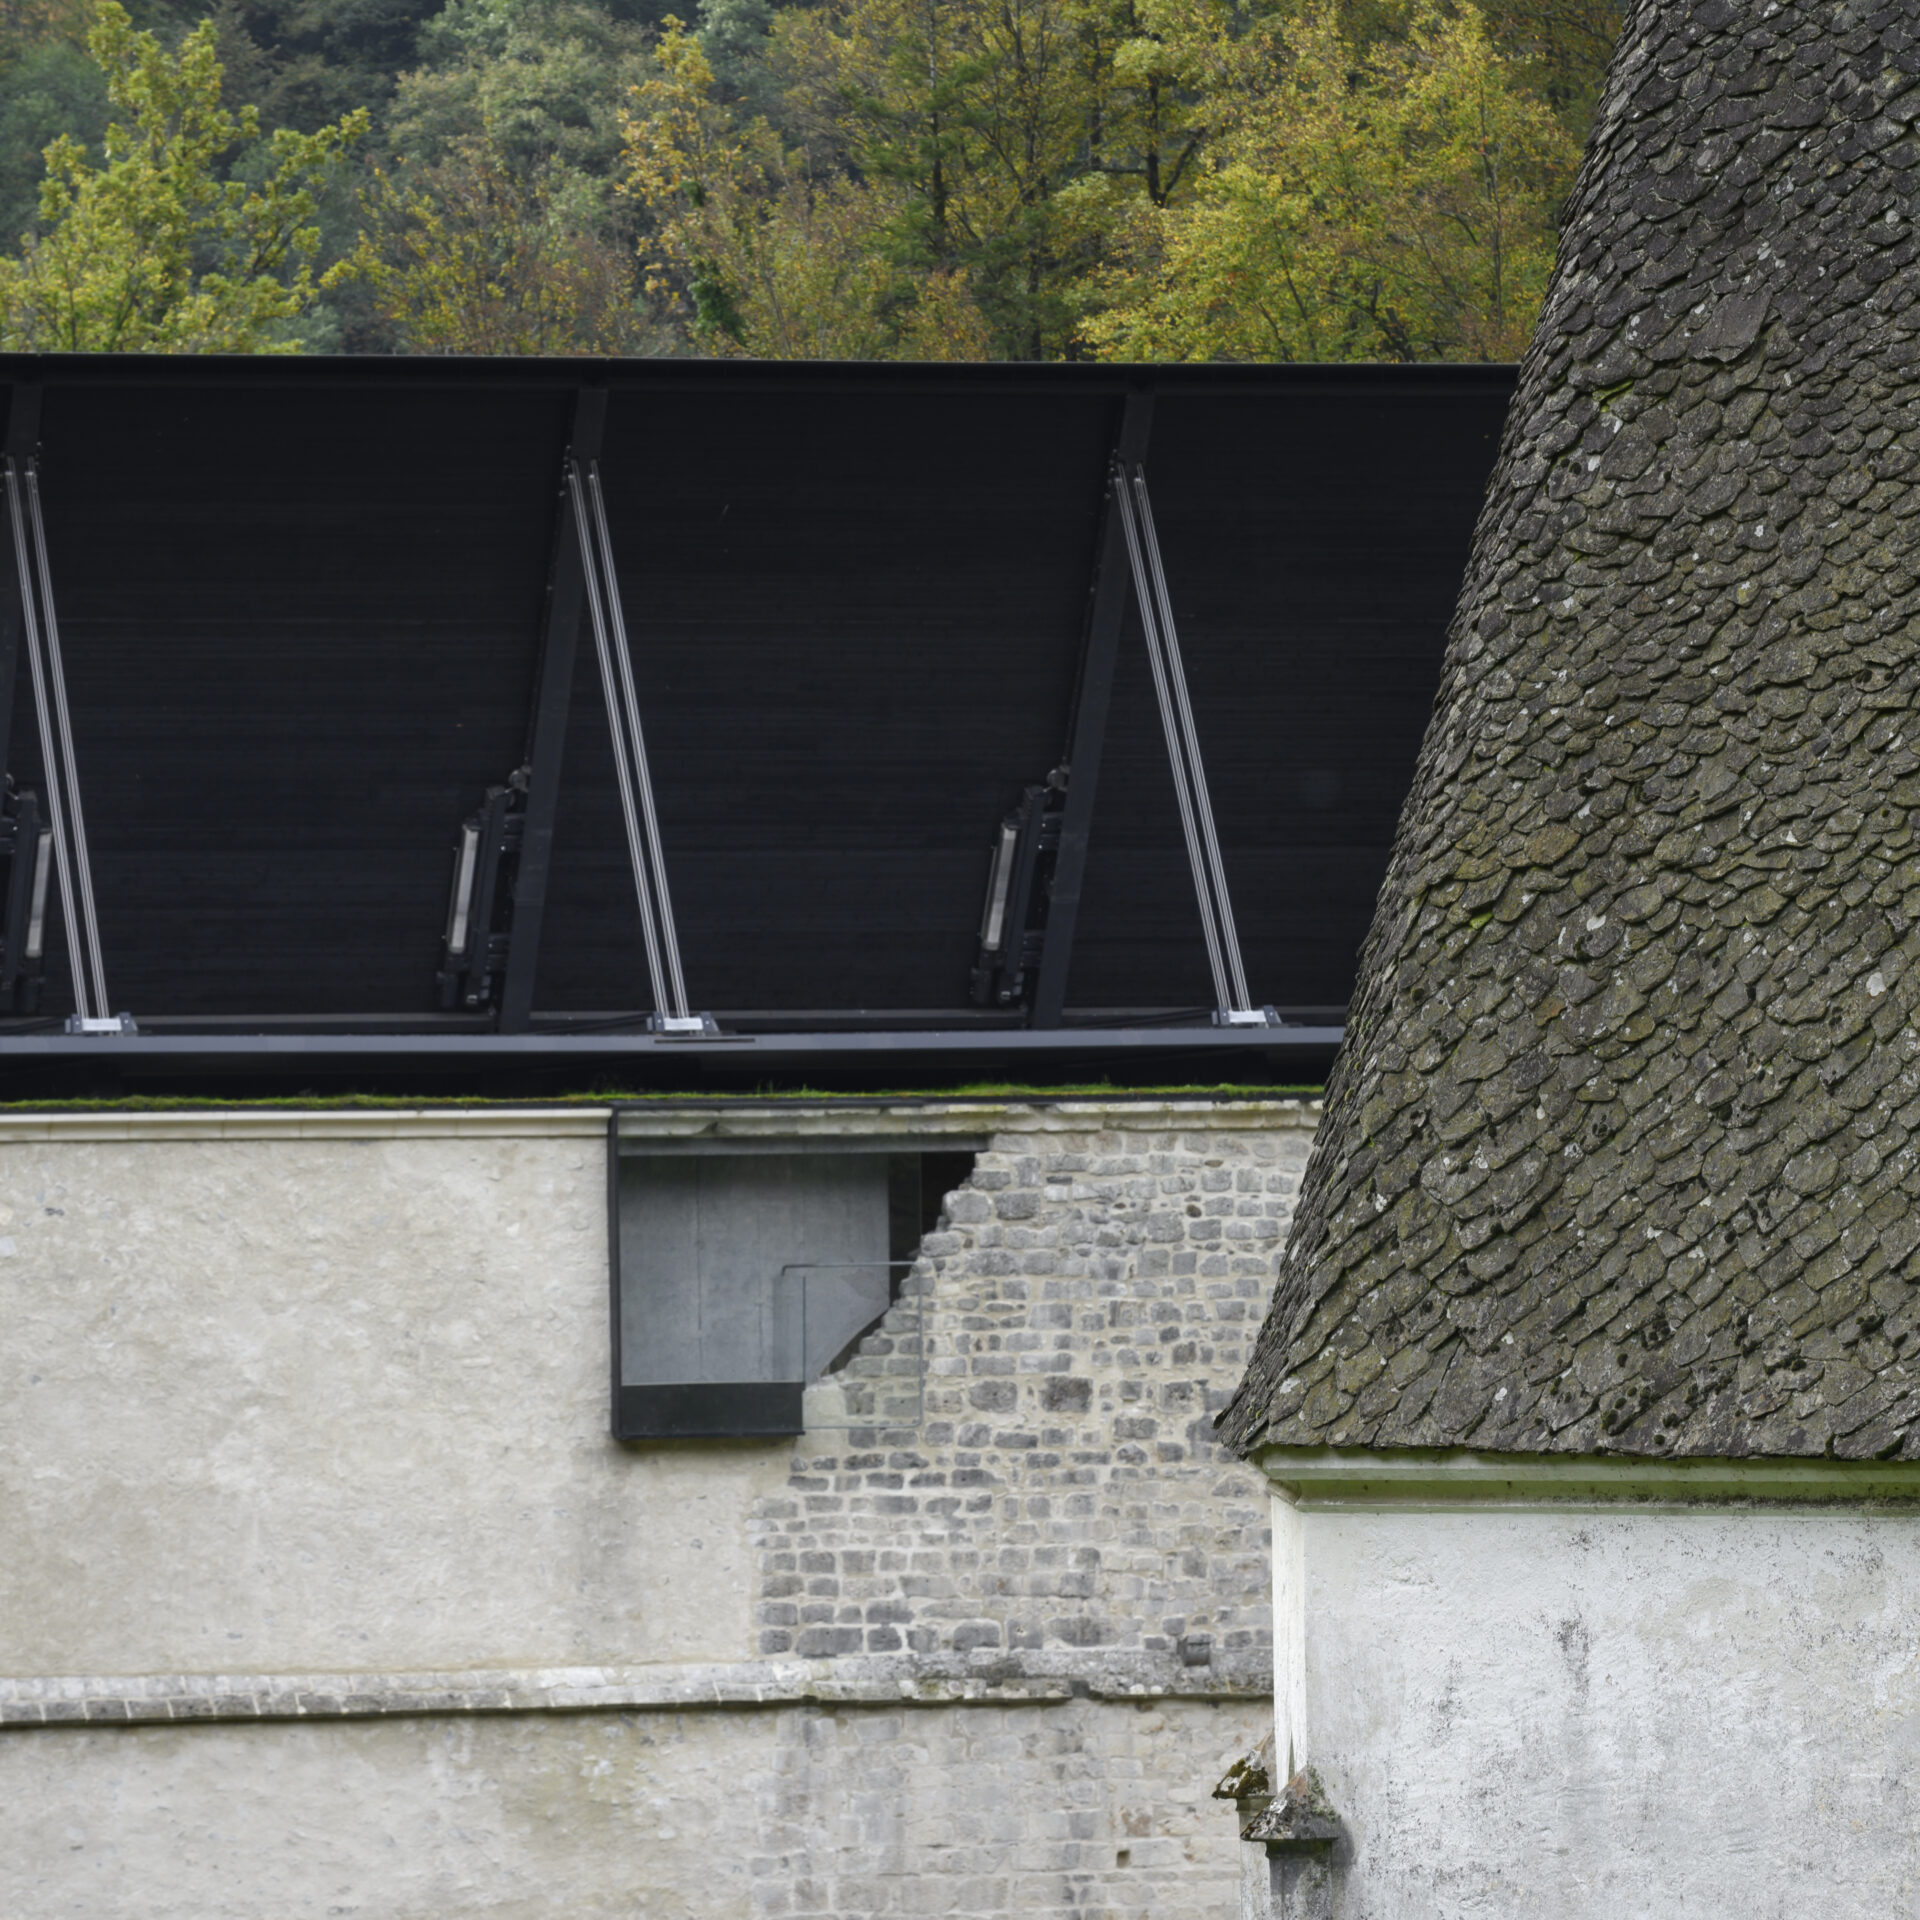 V ožji izbor za nagrado EU Mies van der Rohe sta se uvrstili tudi dve slovenski arhitekturi